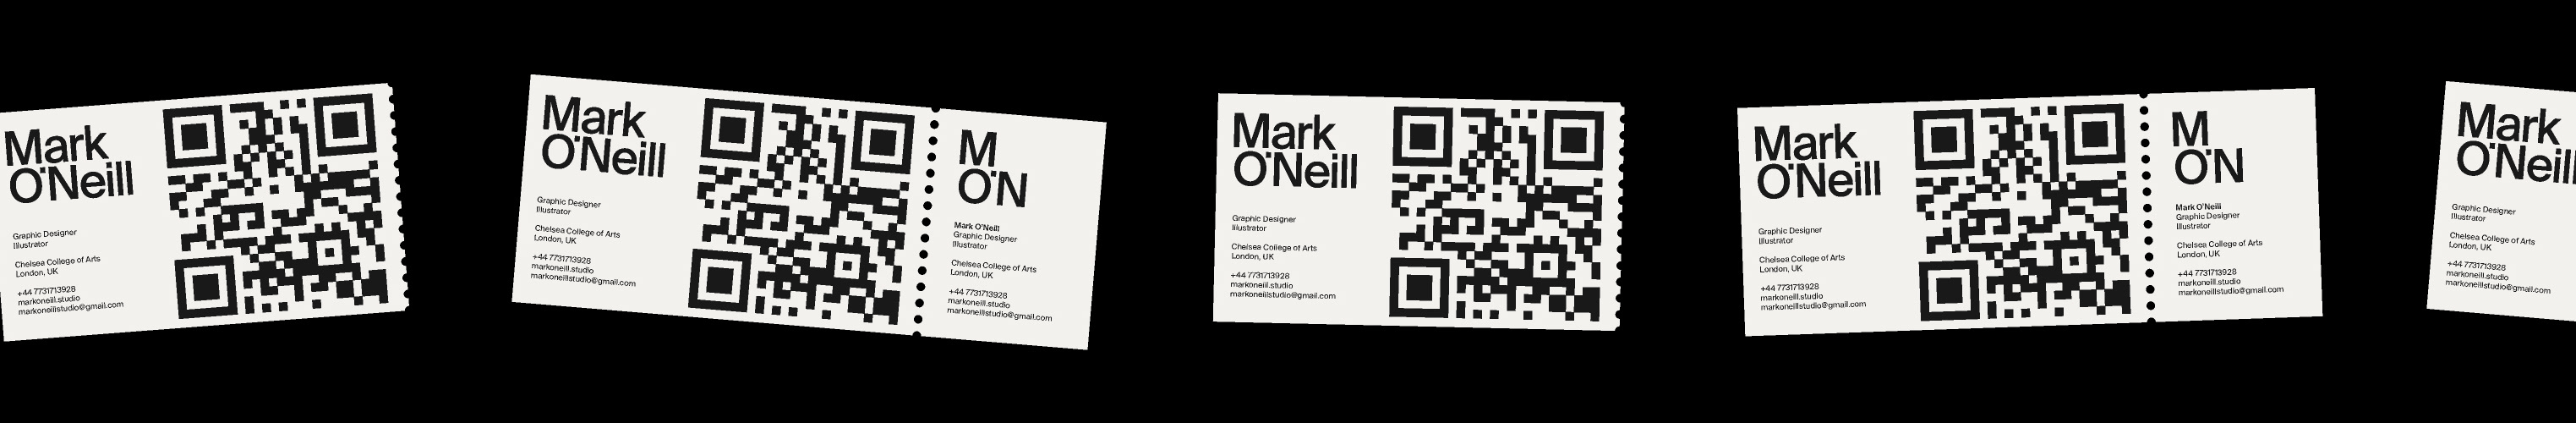 Mark O'Neill's profile banner